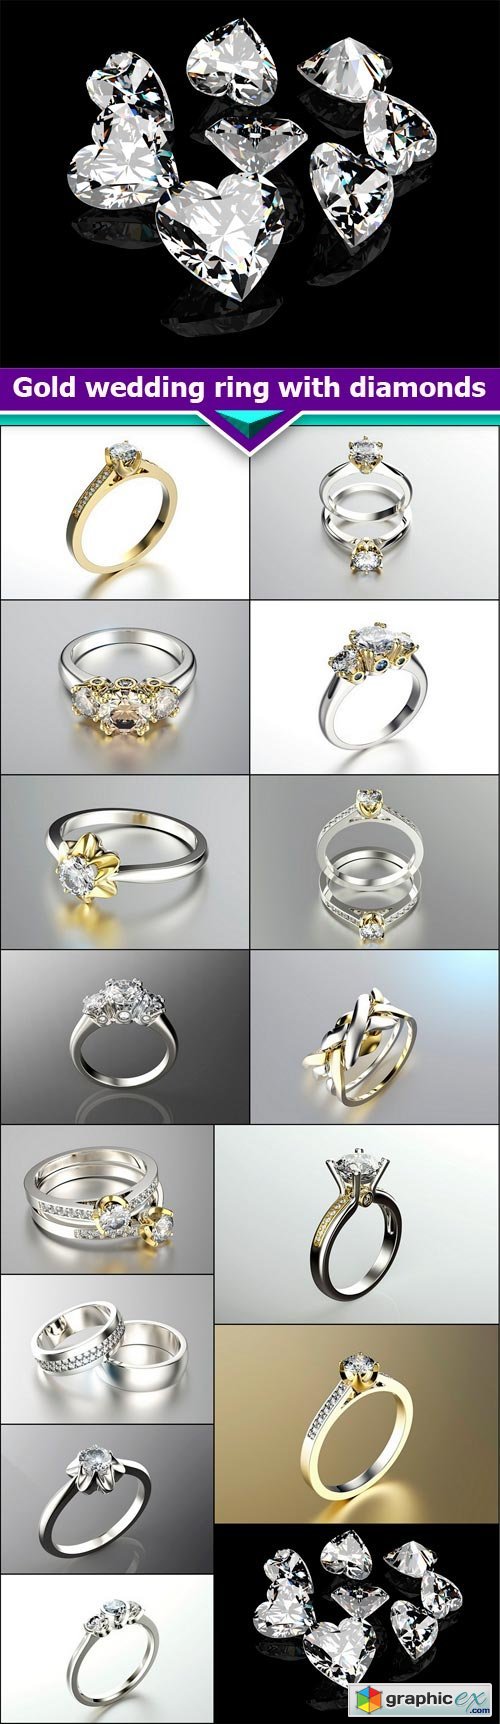 Gold wedding ring with diamonds 15X JPEG